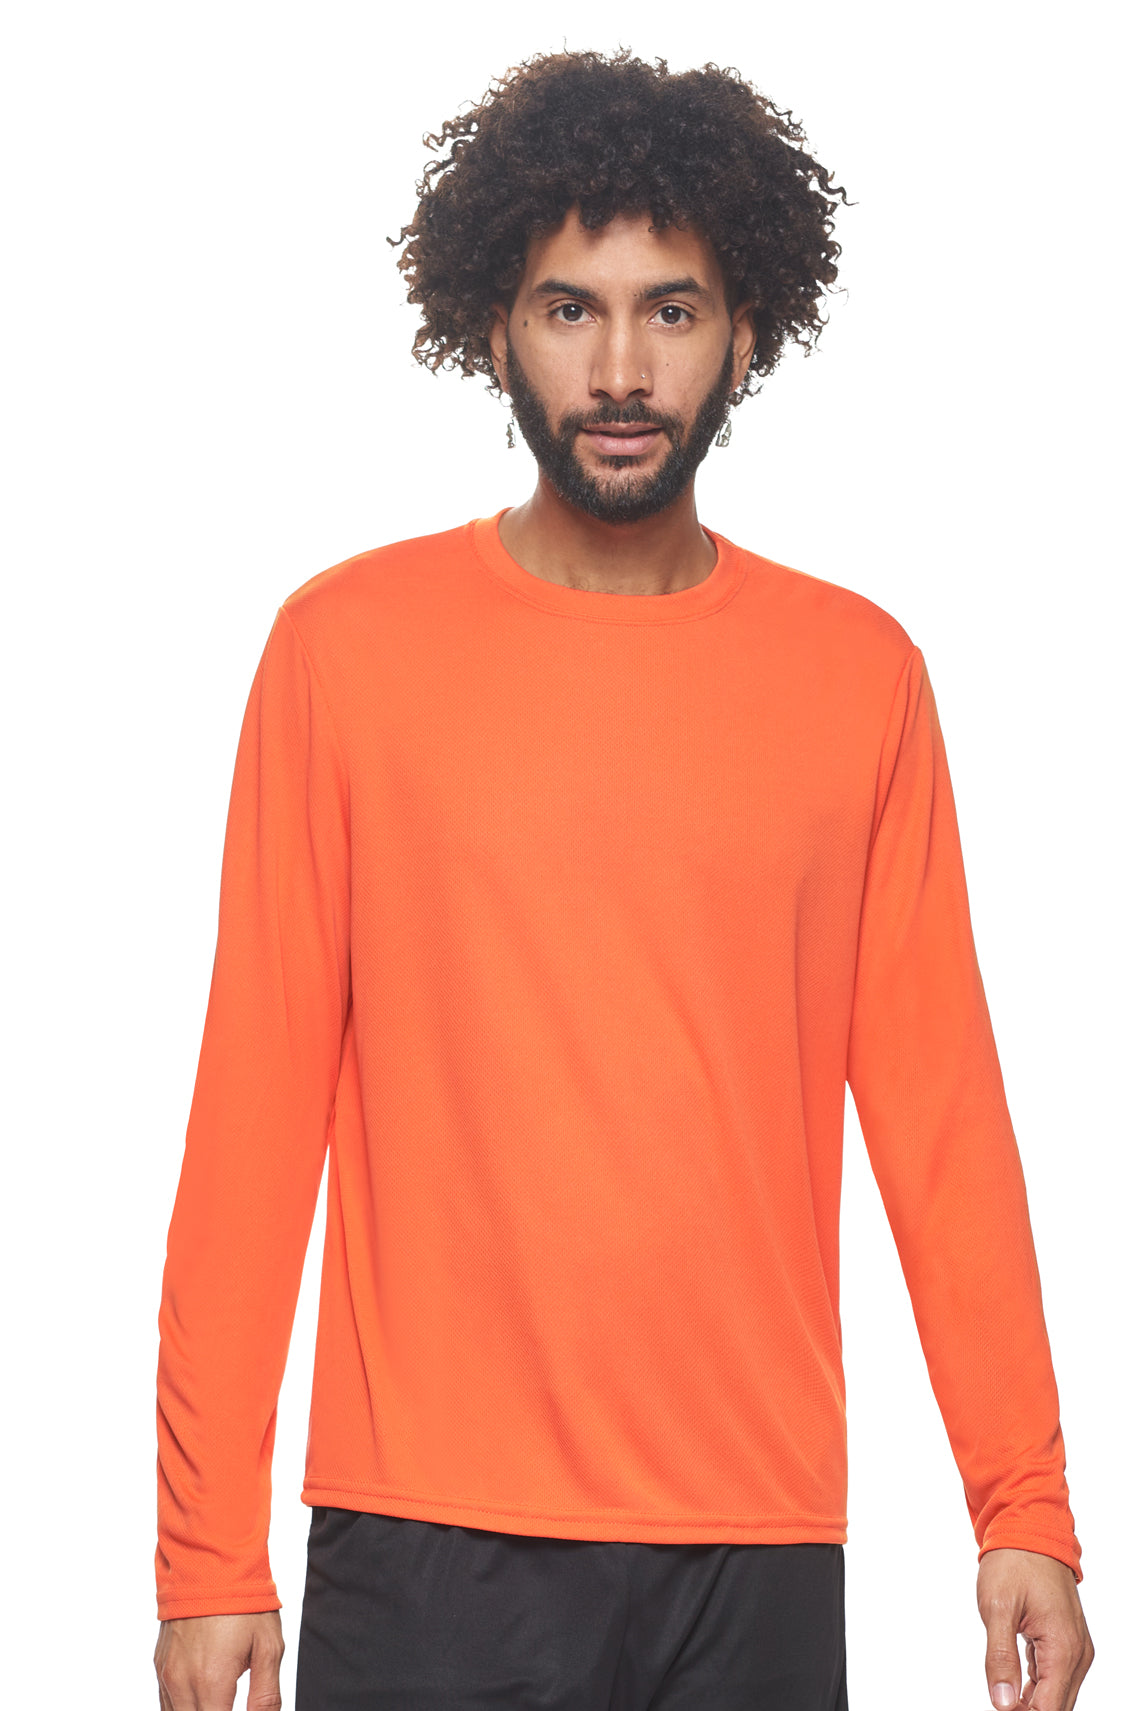 Expert Brand Wholesale Men's Oxymesh Performance Long Sleeve Tec Tee Made in USA AJ901D Orange#orange